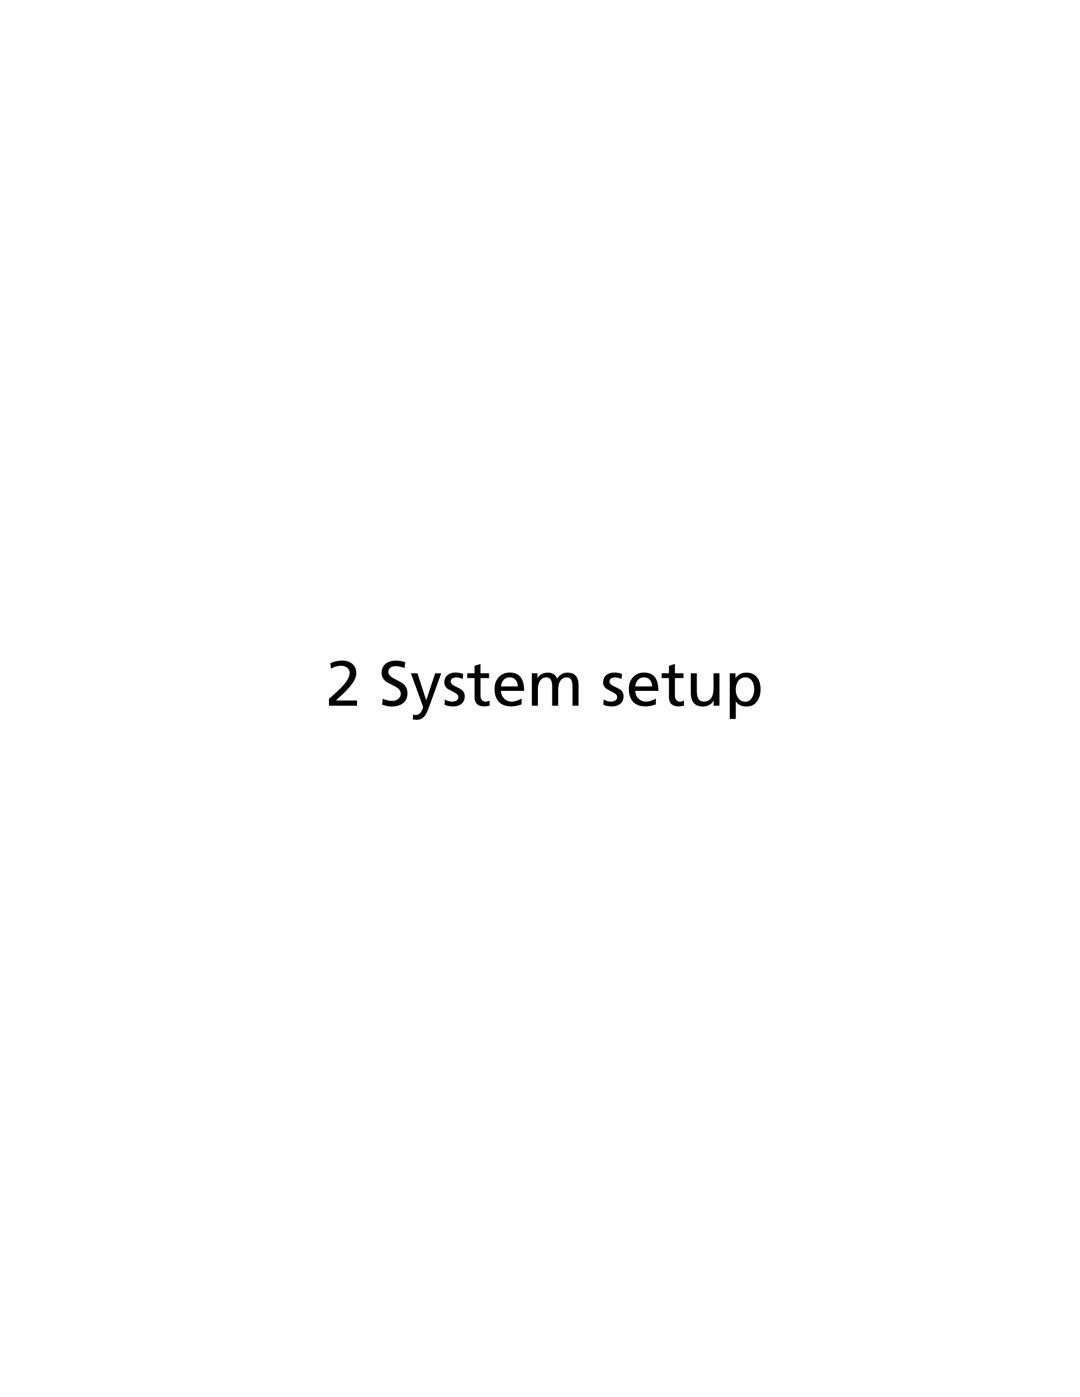 Acer G520 series manual System setup 